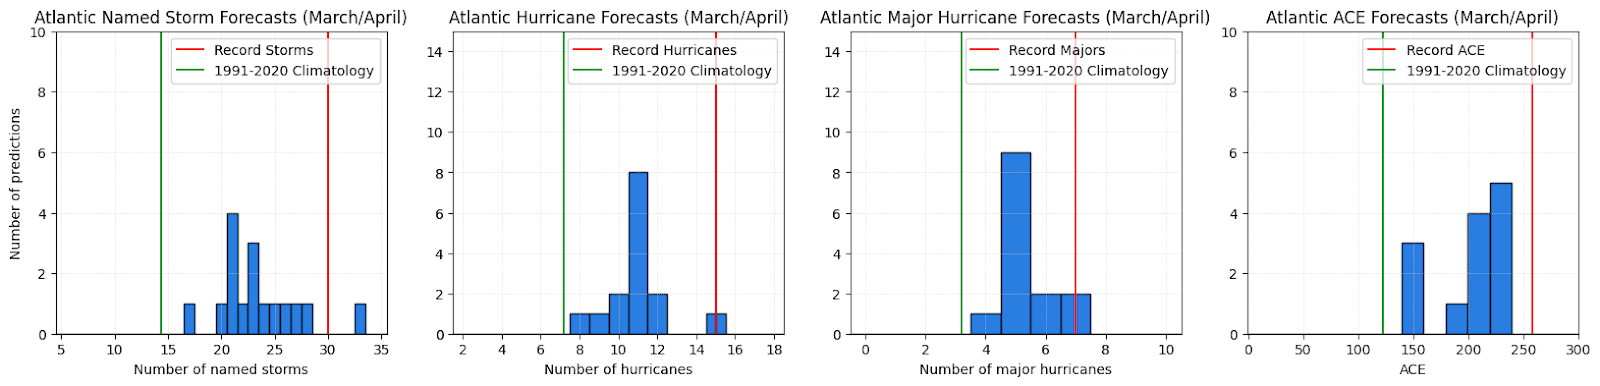 Hurricane Forecast Graphs